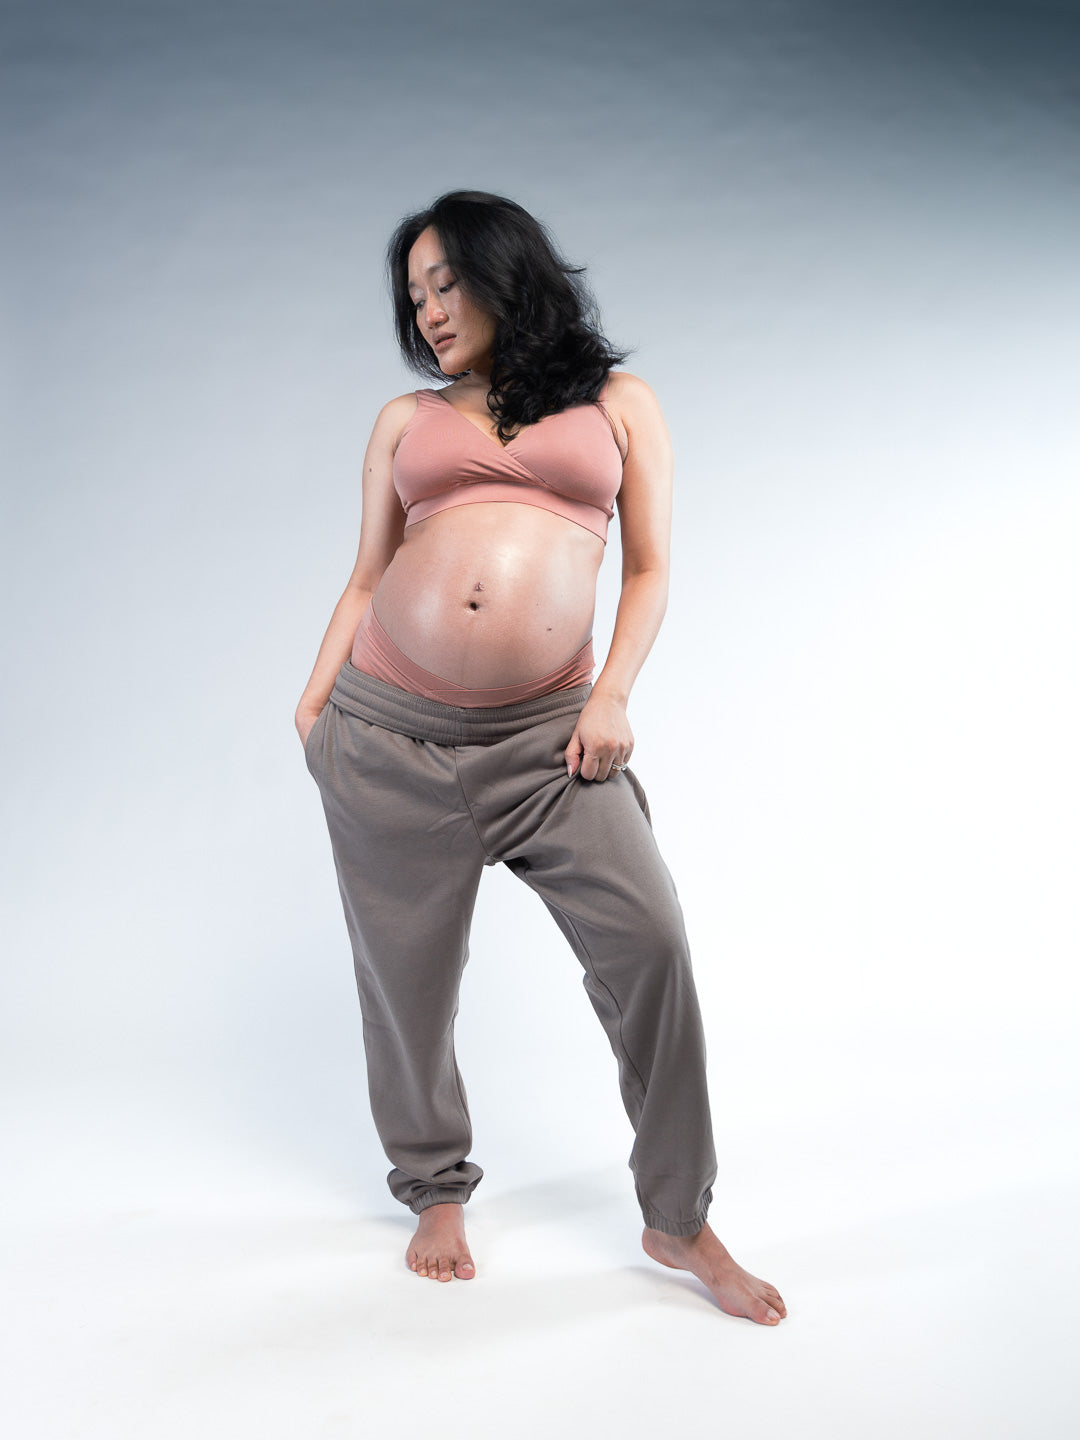 maternity nursing bras, maternity bras, nursing bras, www…